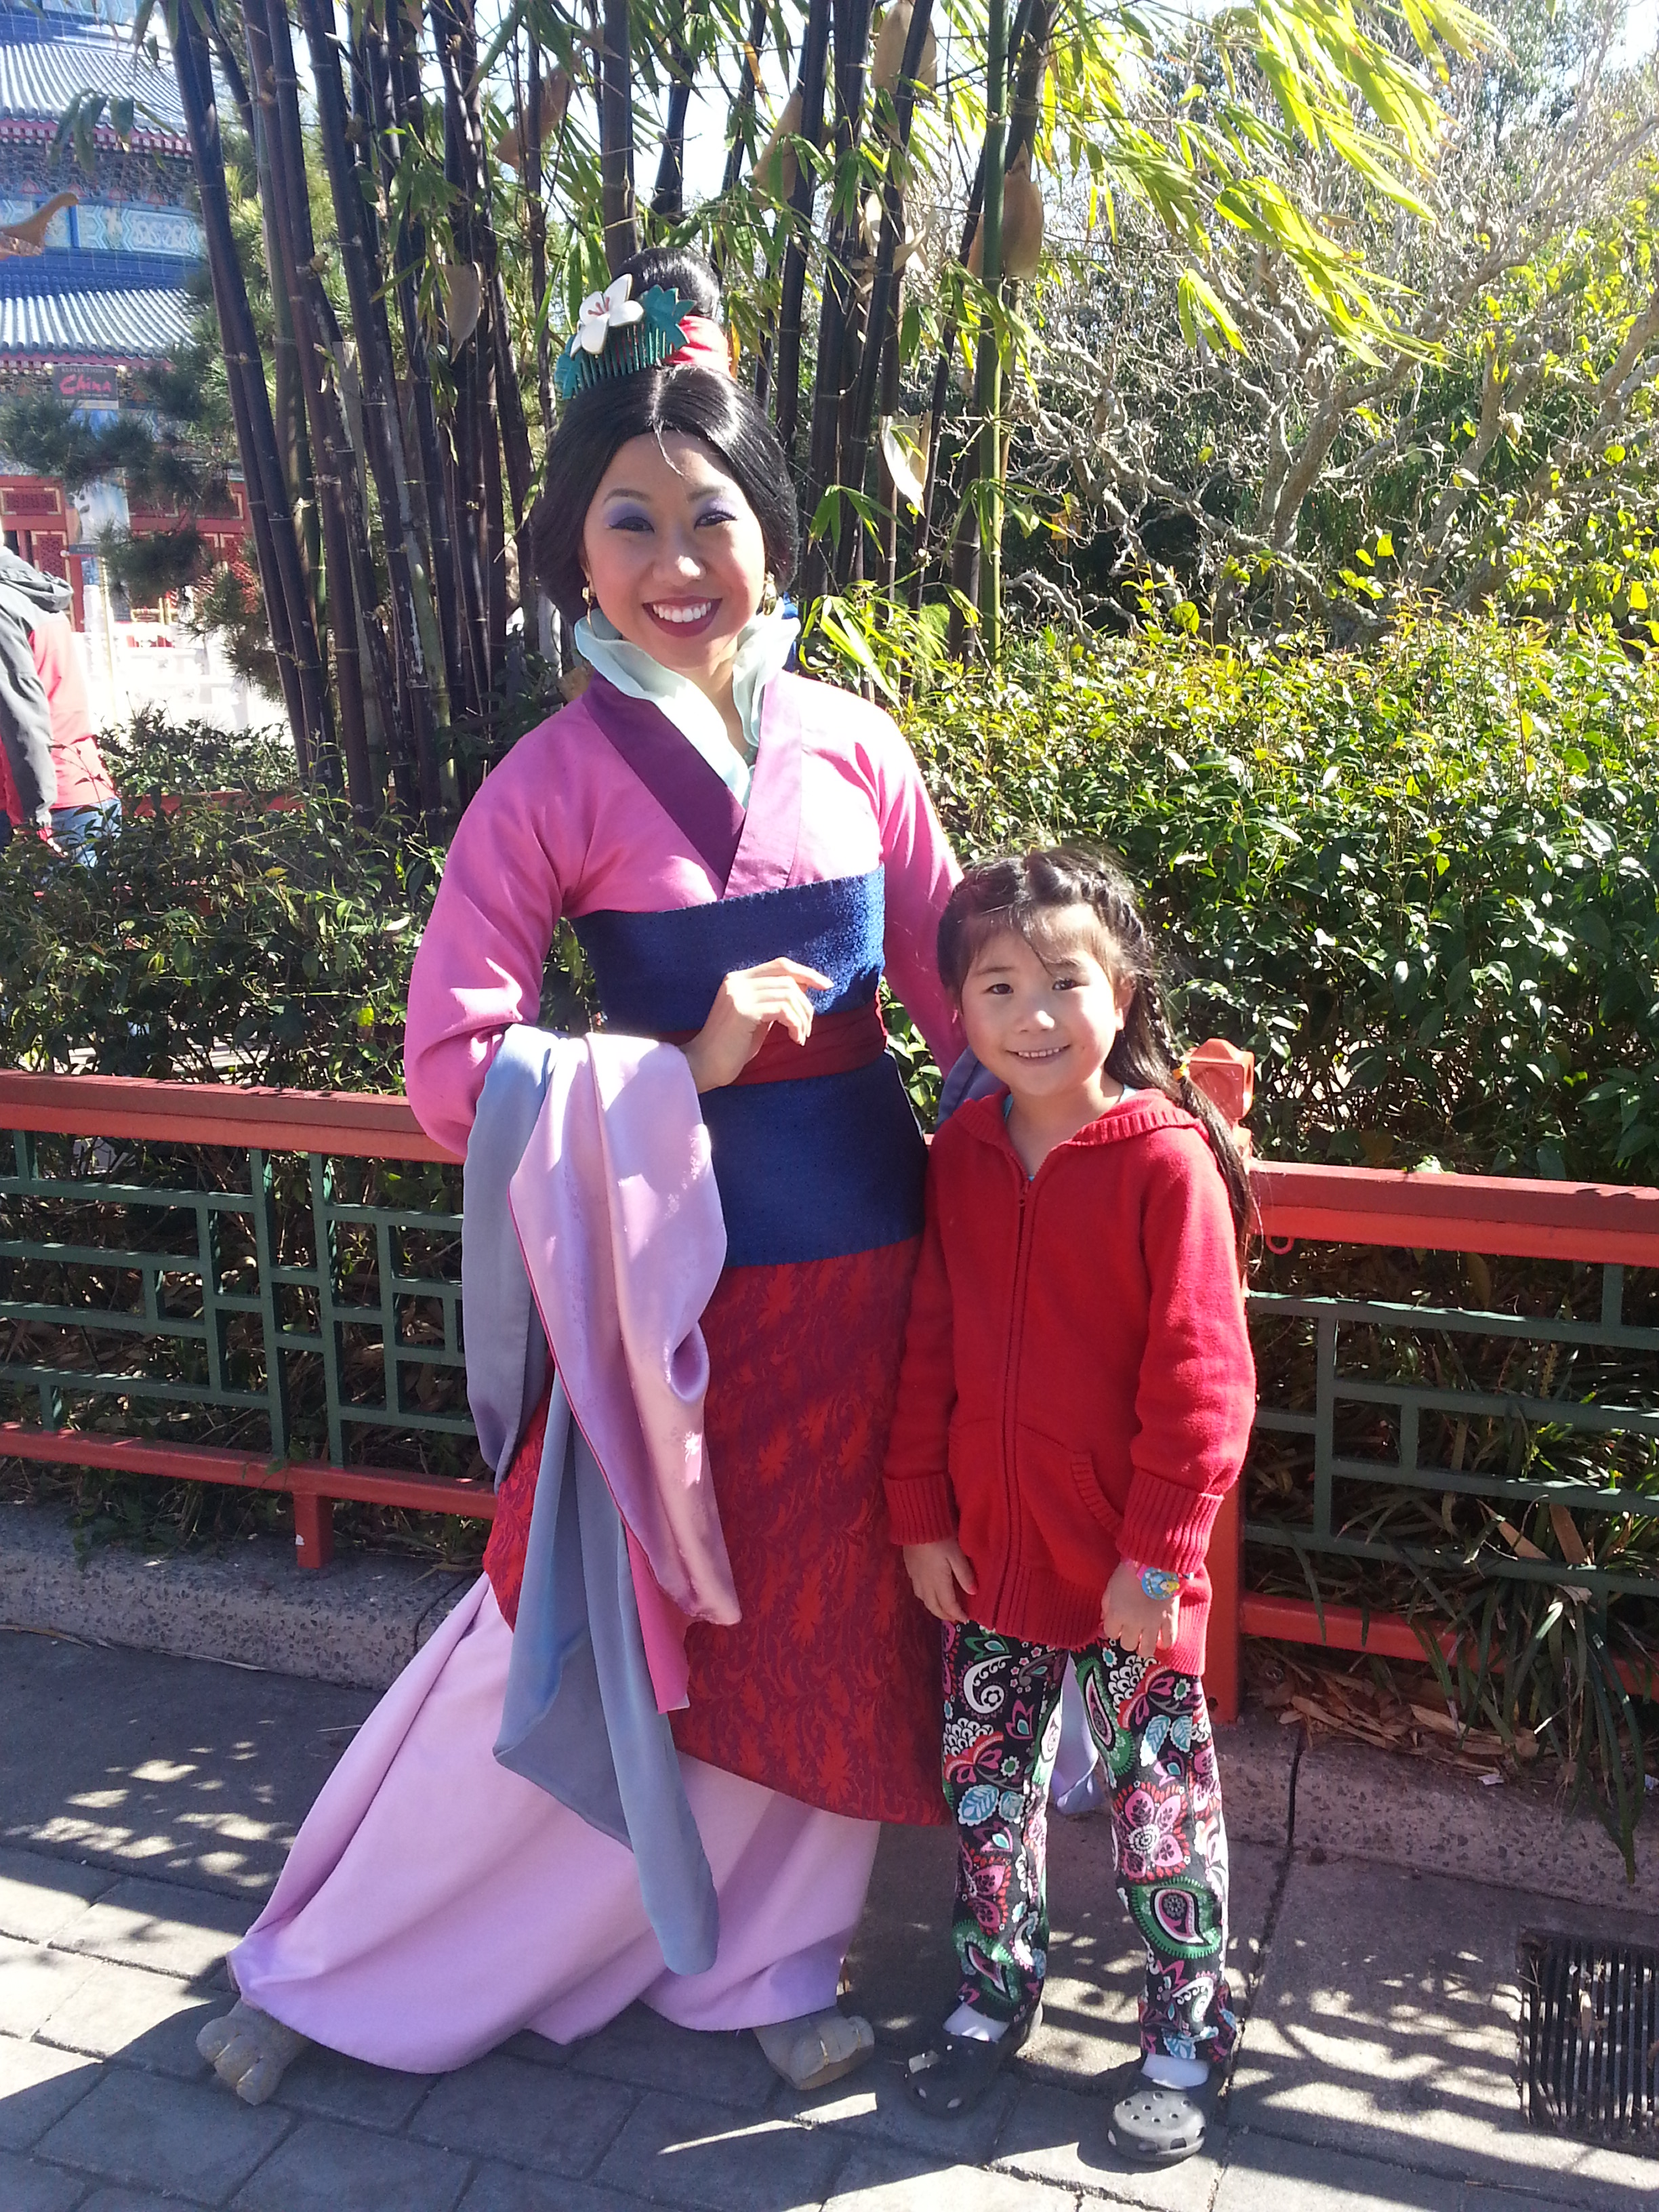 11 Positive Personality Traits of Princess Mulan Worth Developing